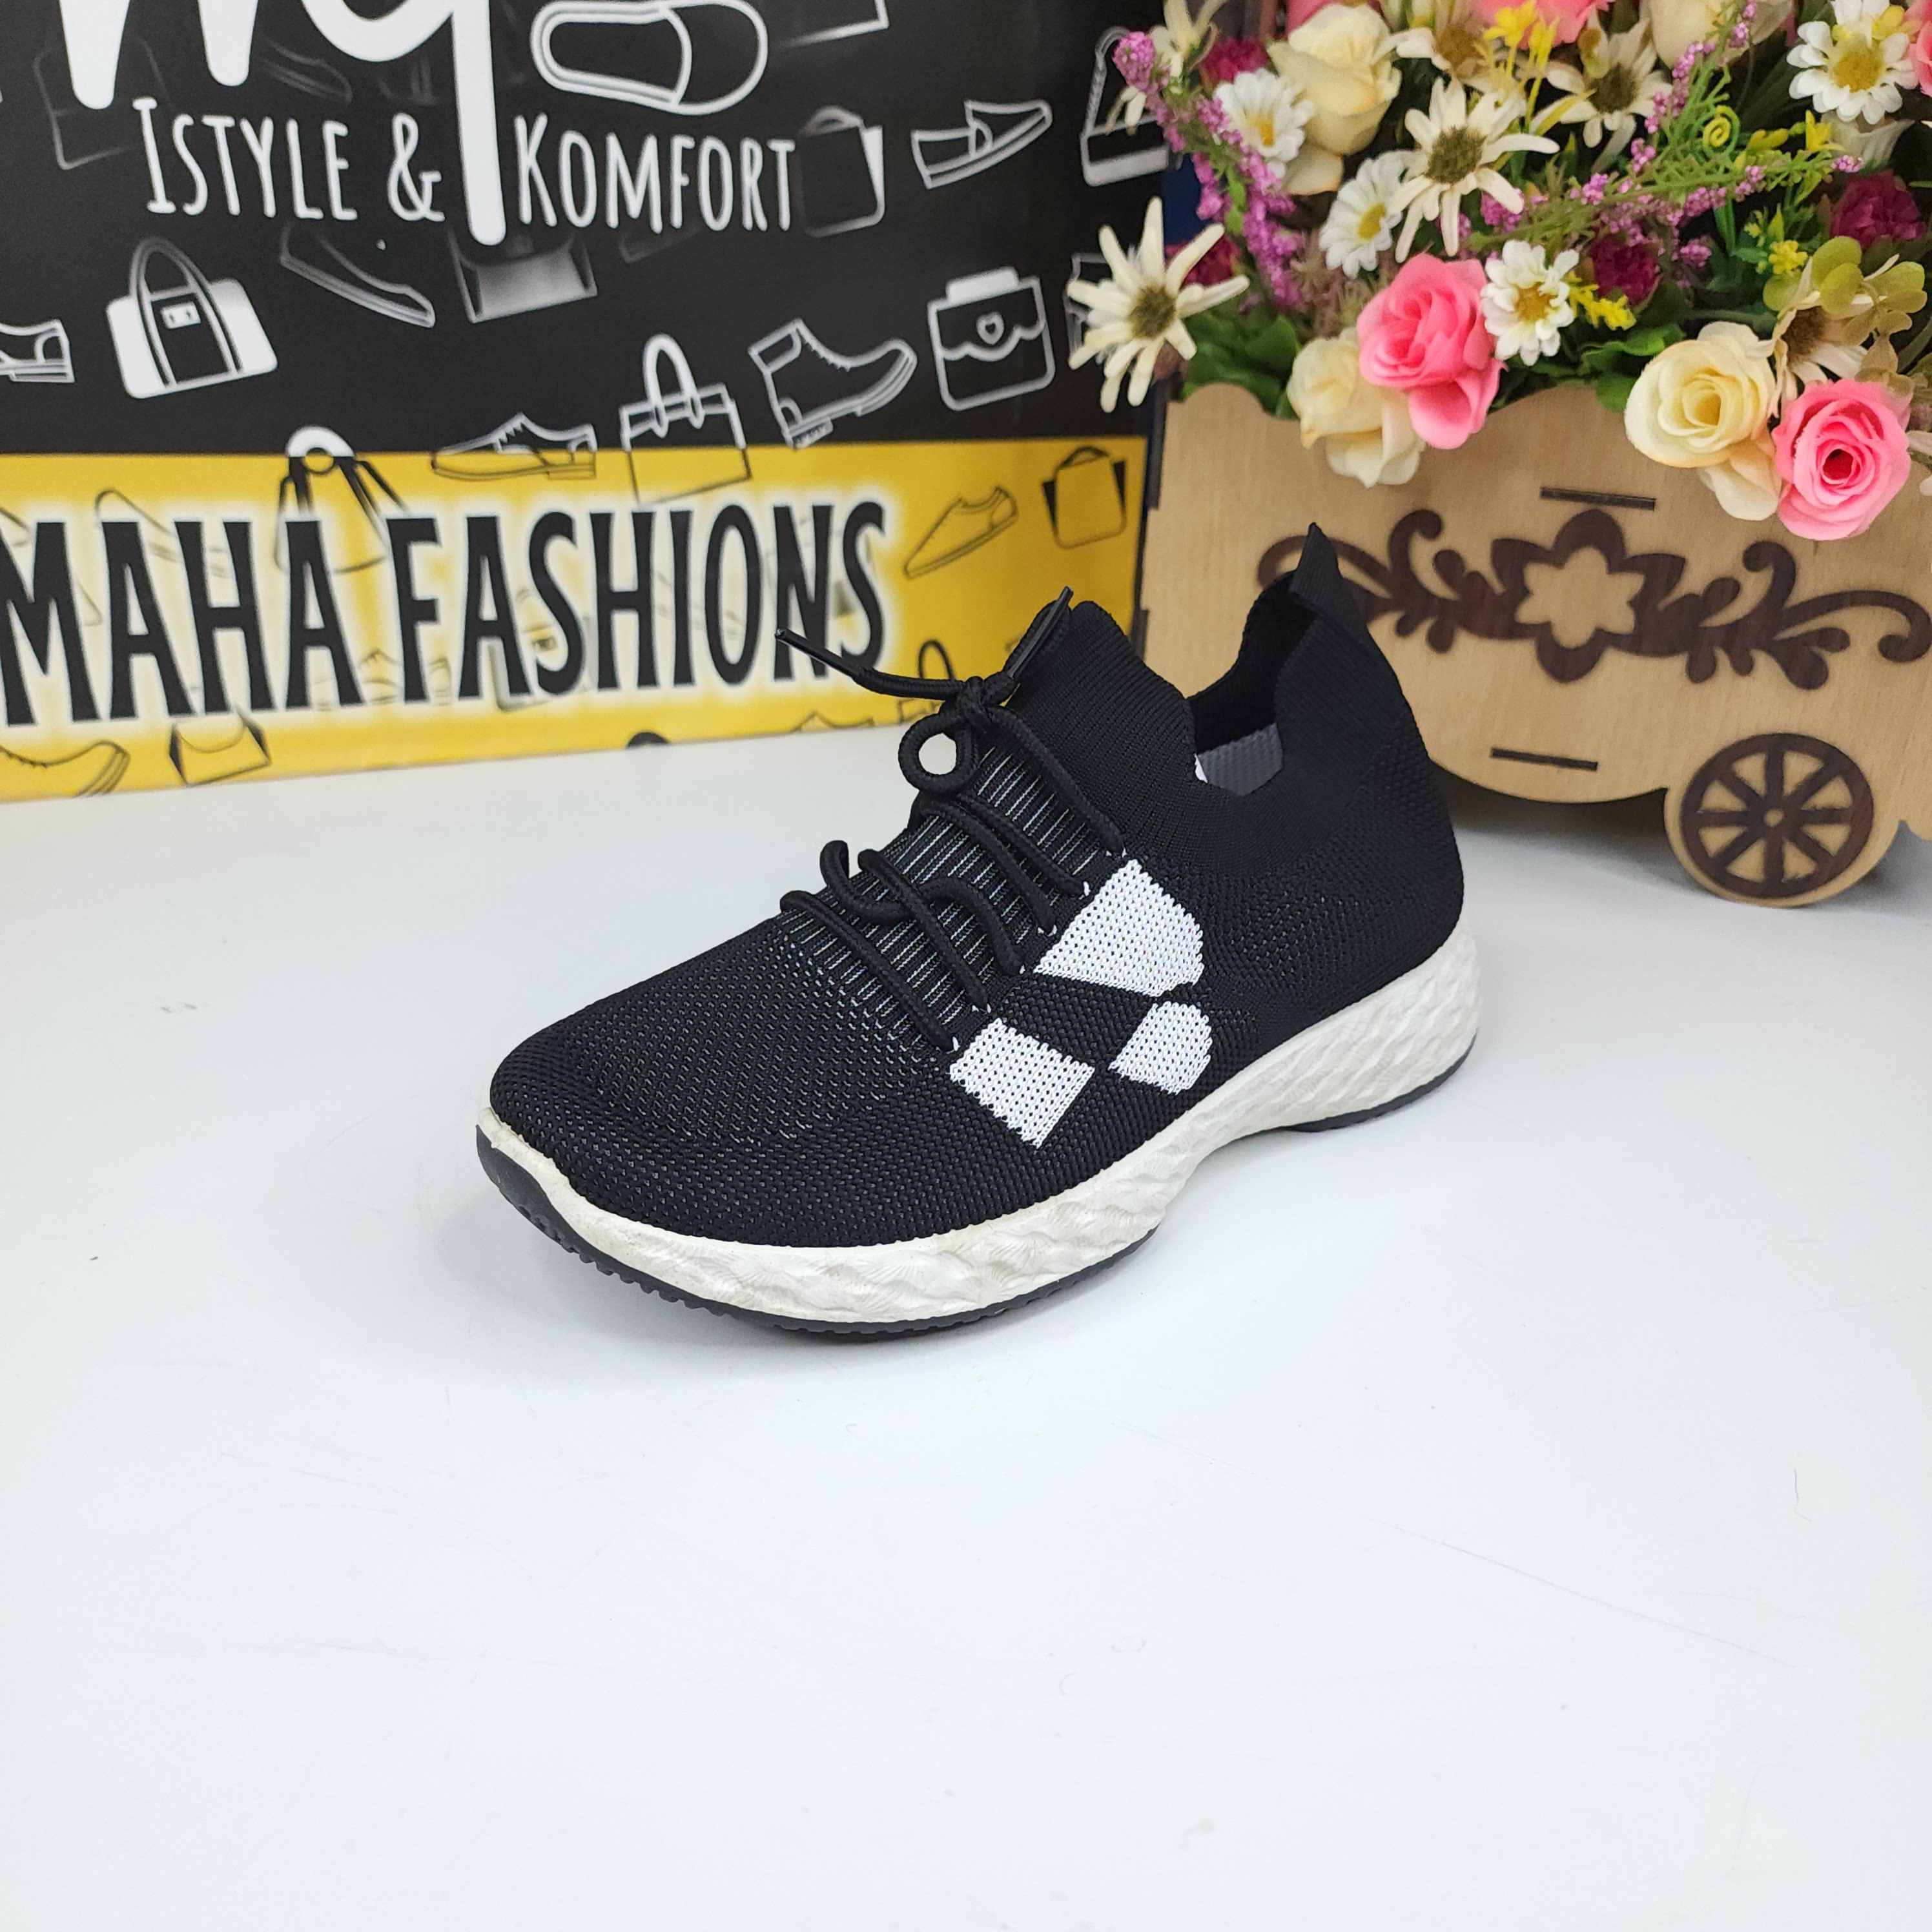 Black Casua Shoes - Maha fashions -  